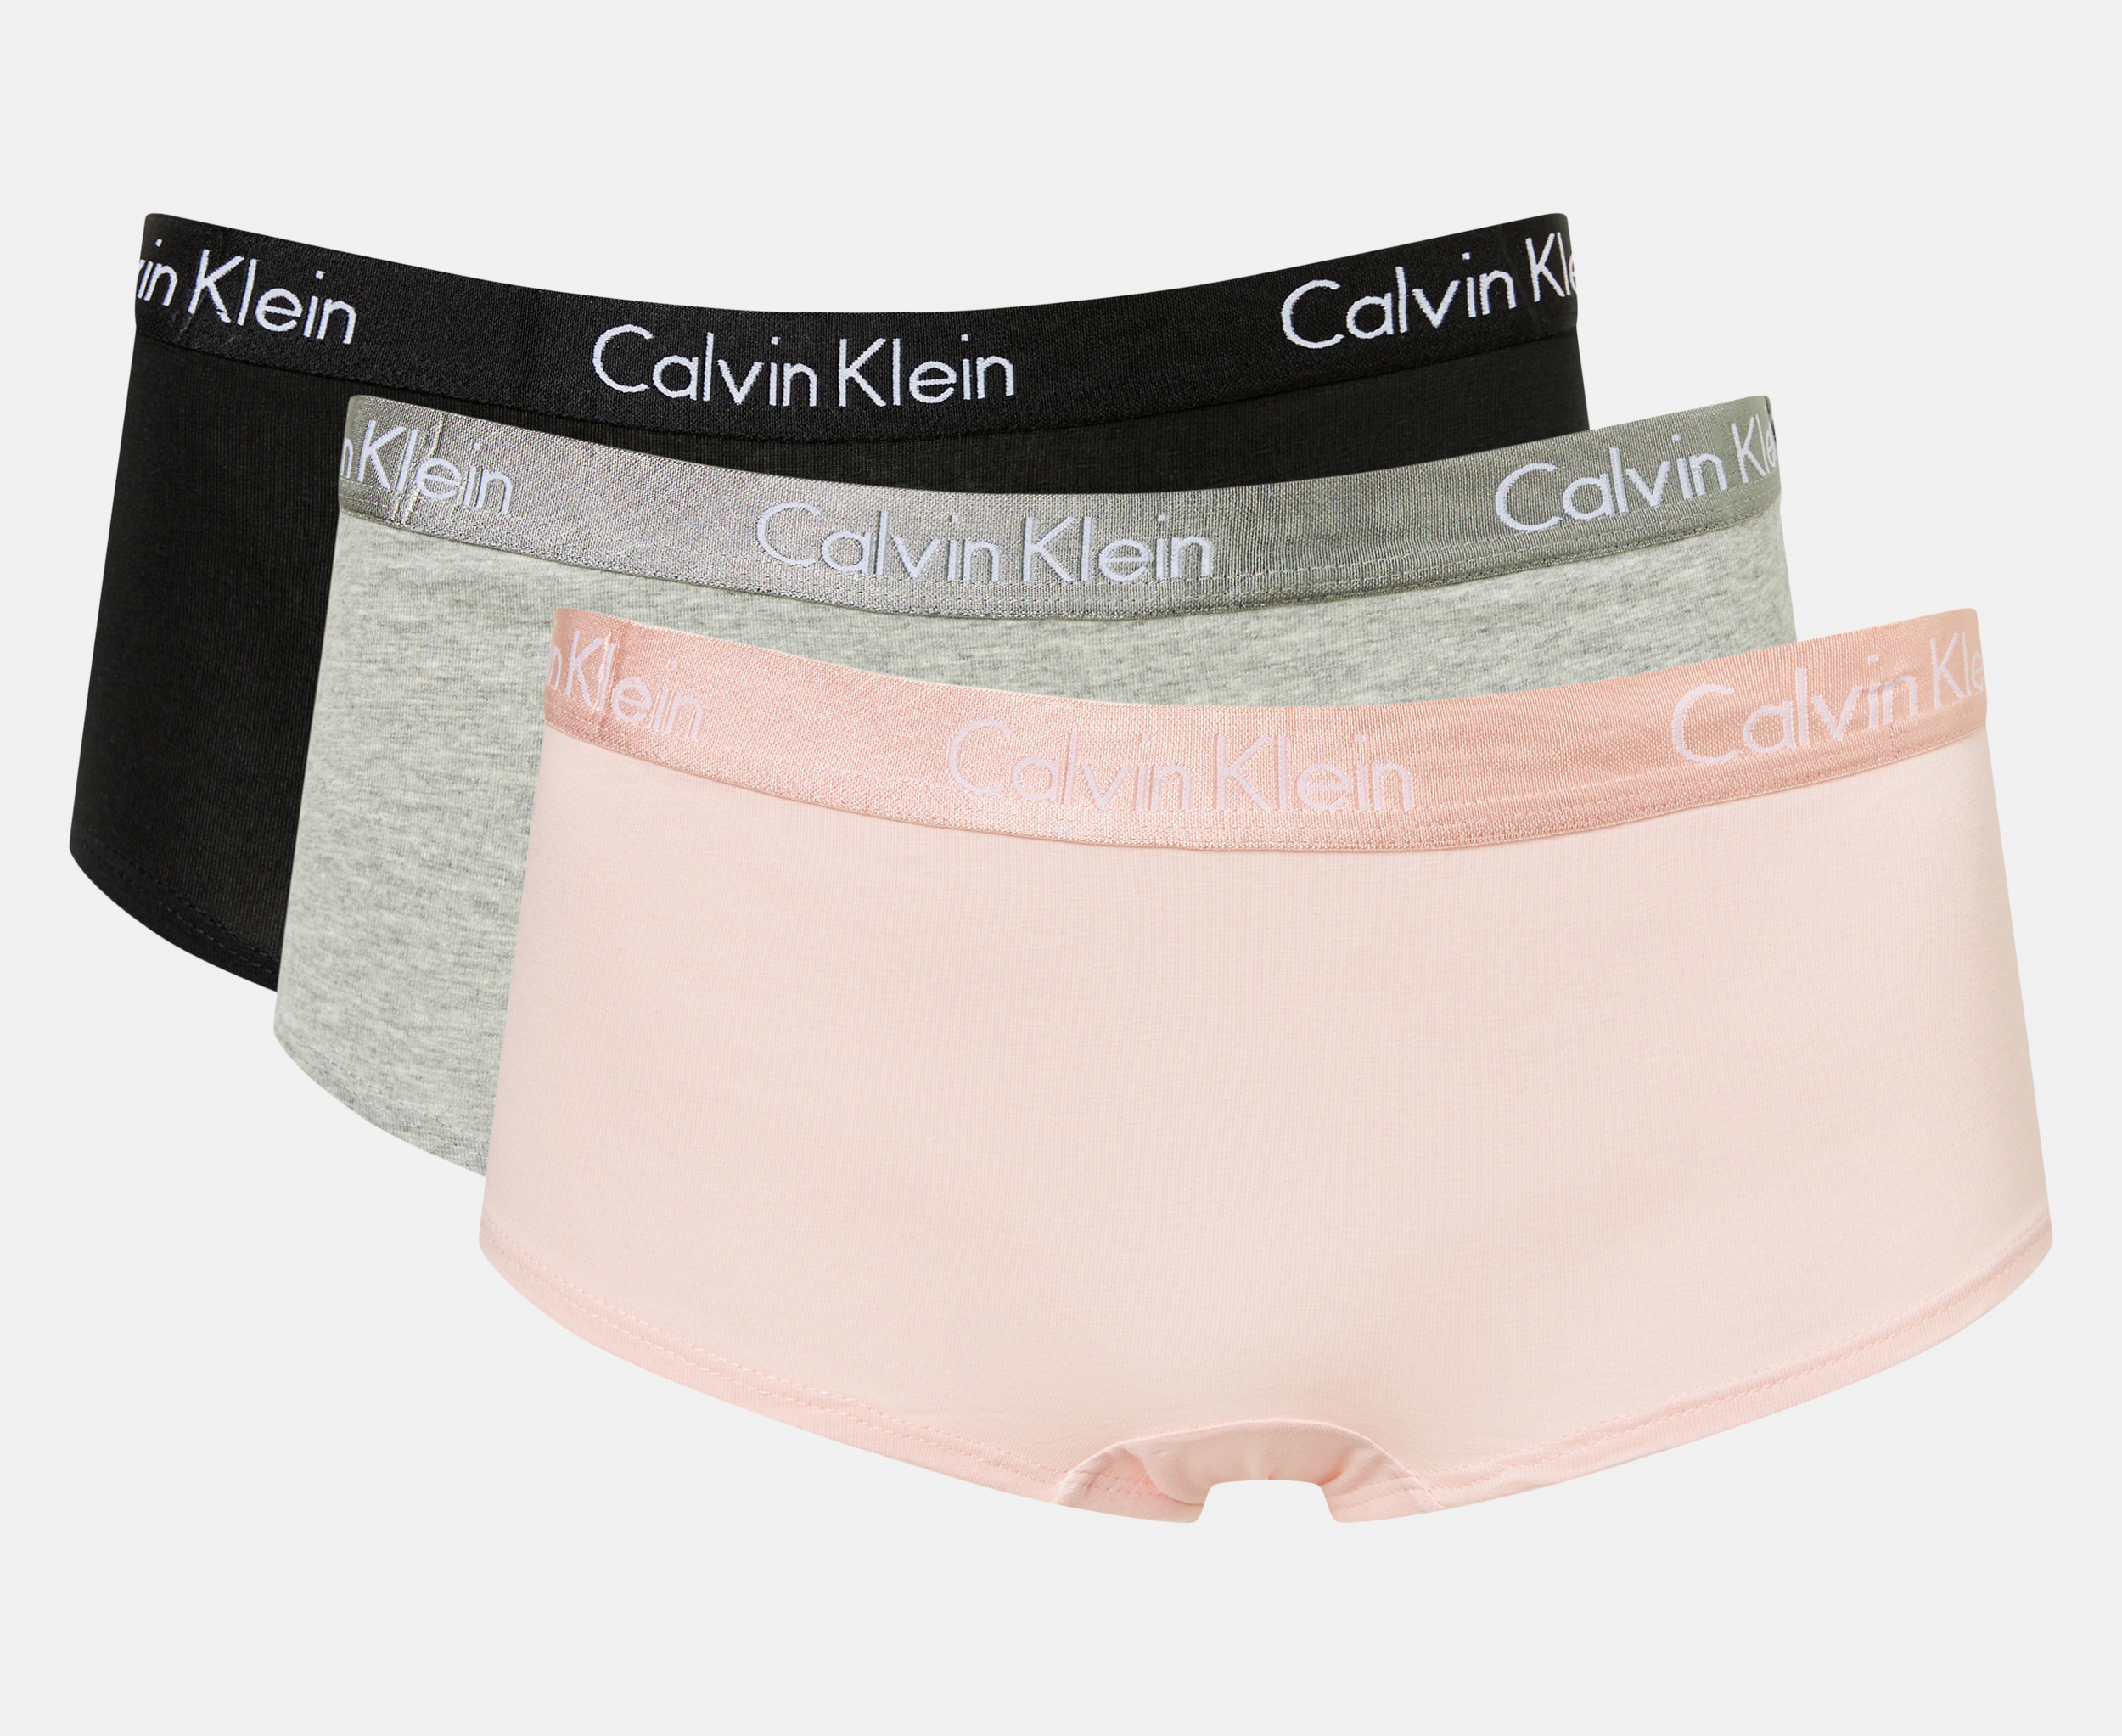 Calvin Klein Women's Motive Cotton Boyshorts 3-Pack - Black/Grey  Heather/Nymph's Thigh